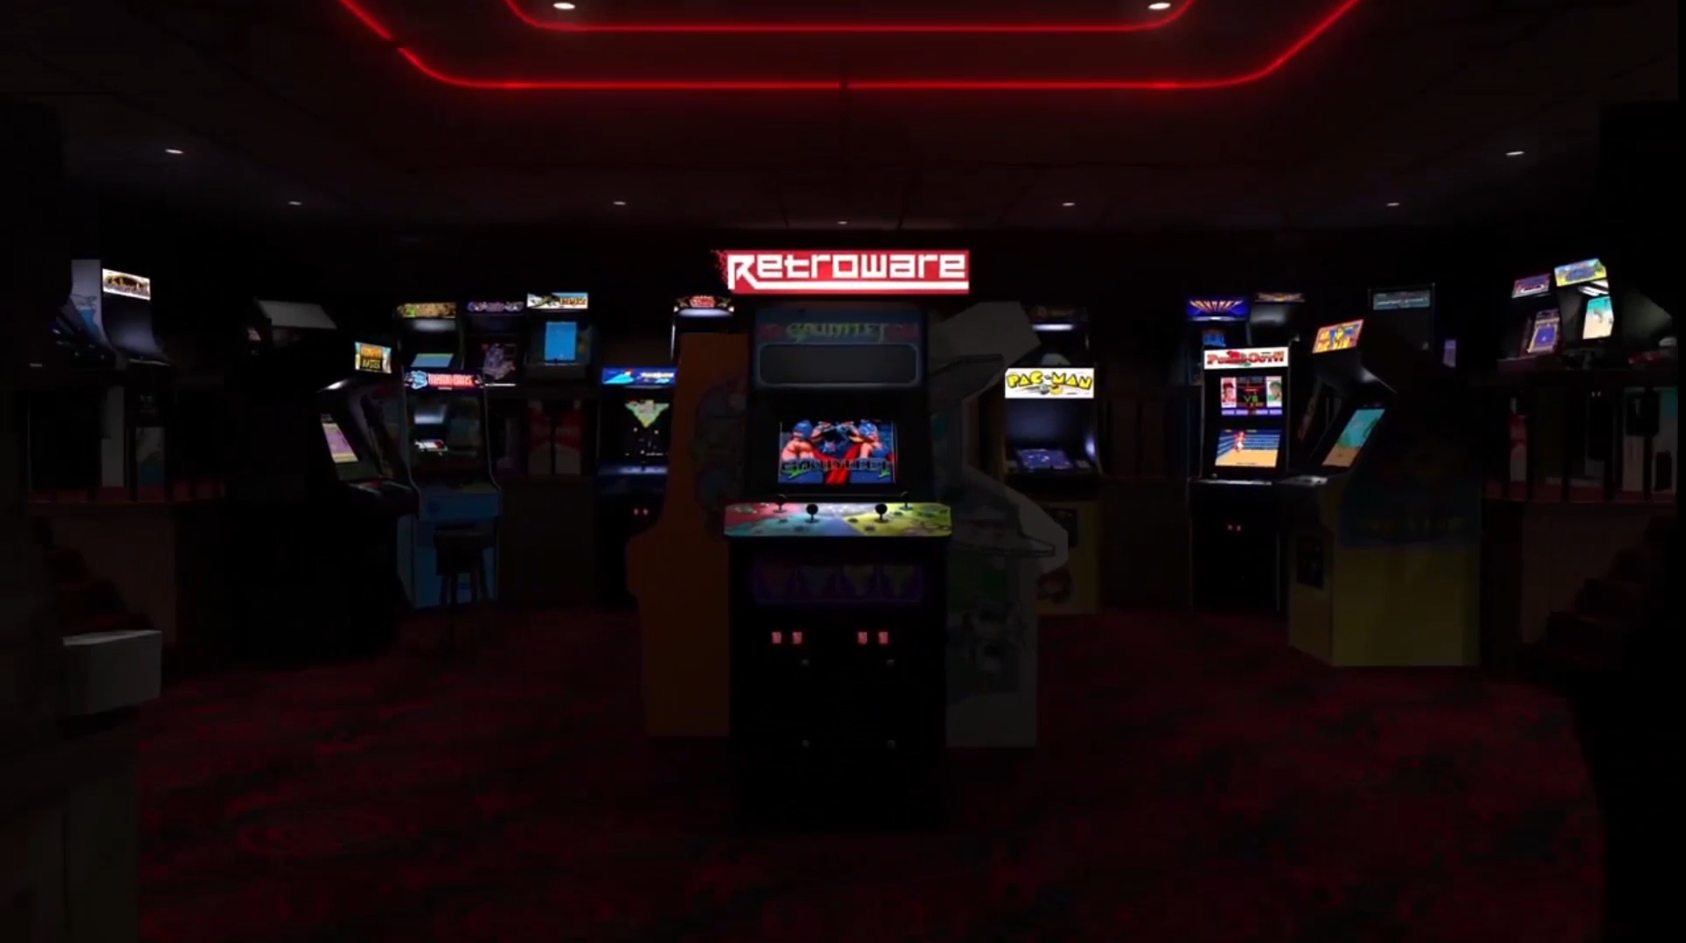 More information about "Arcade Classics Platform Theme Video"